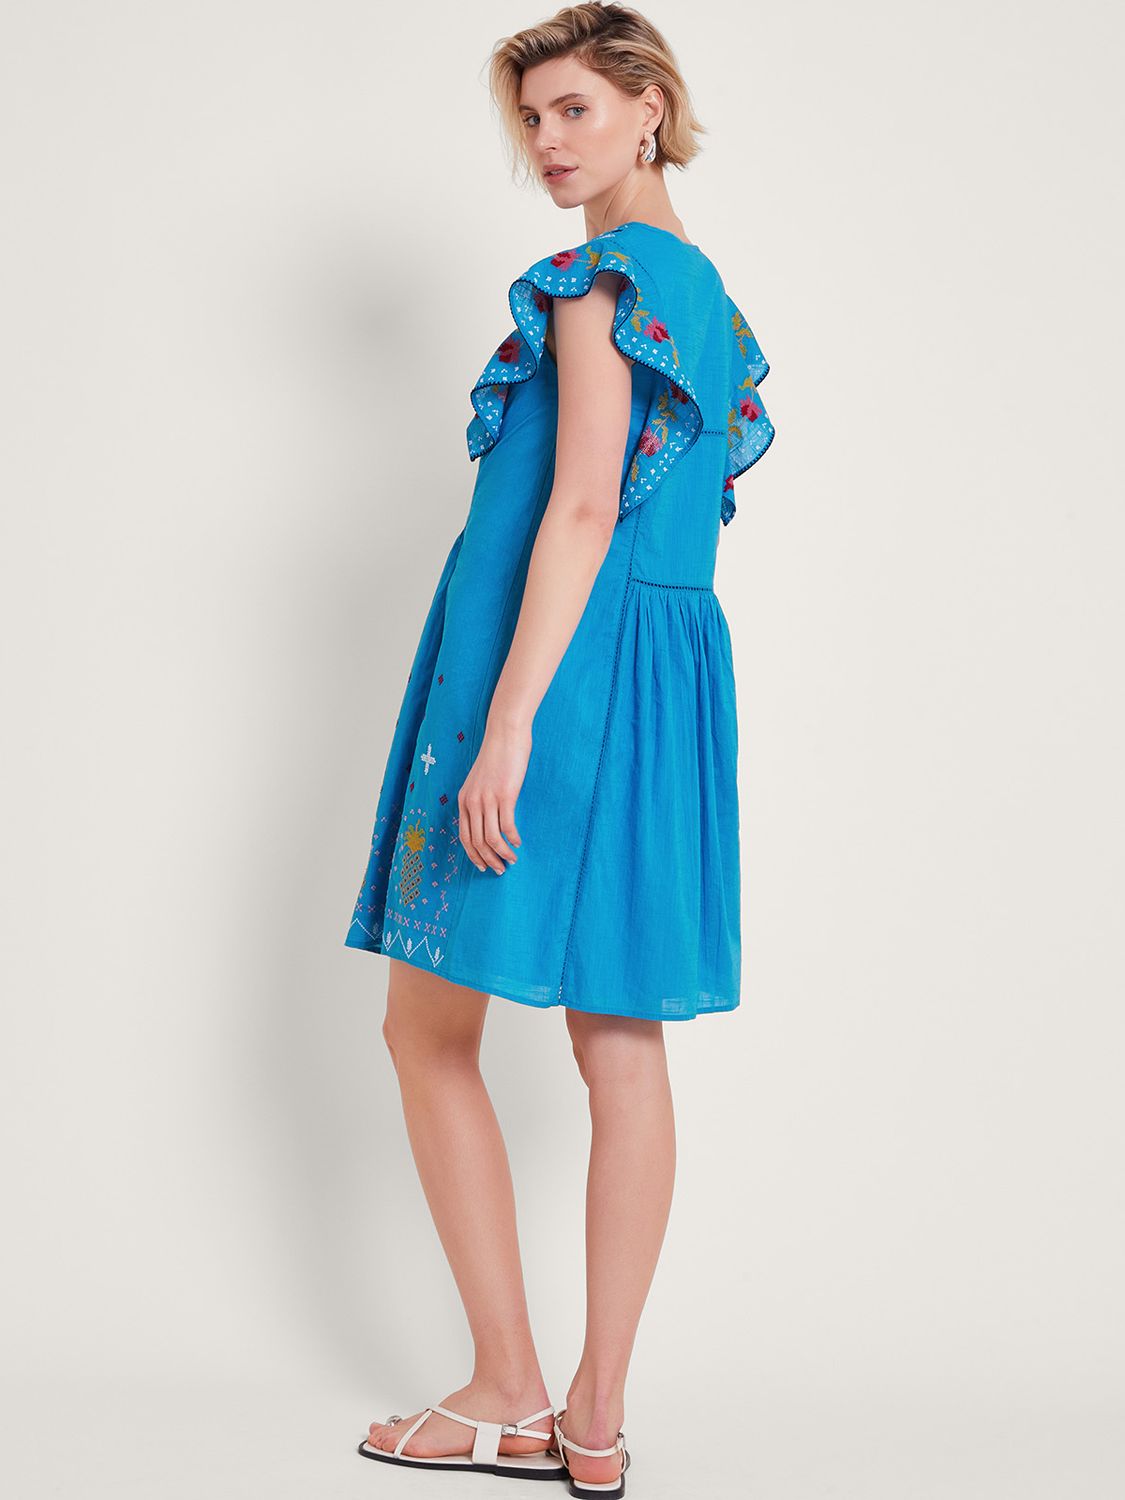 Monsoon Prue Pineapple Embroidery Cotton Dress, Blue, S